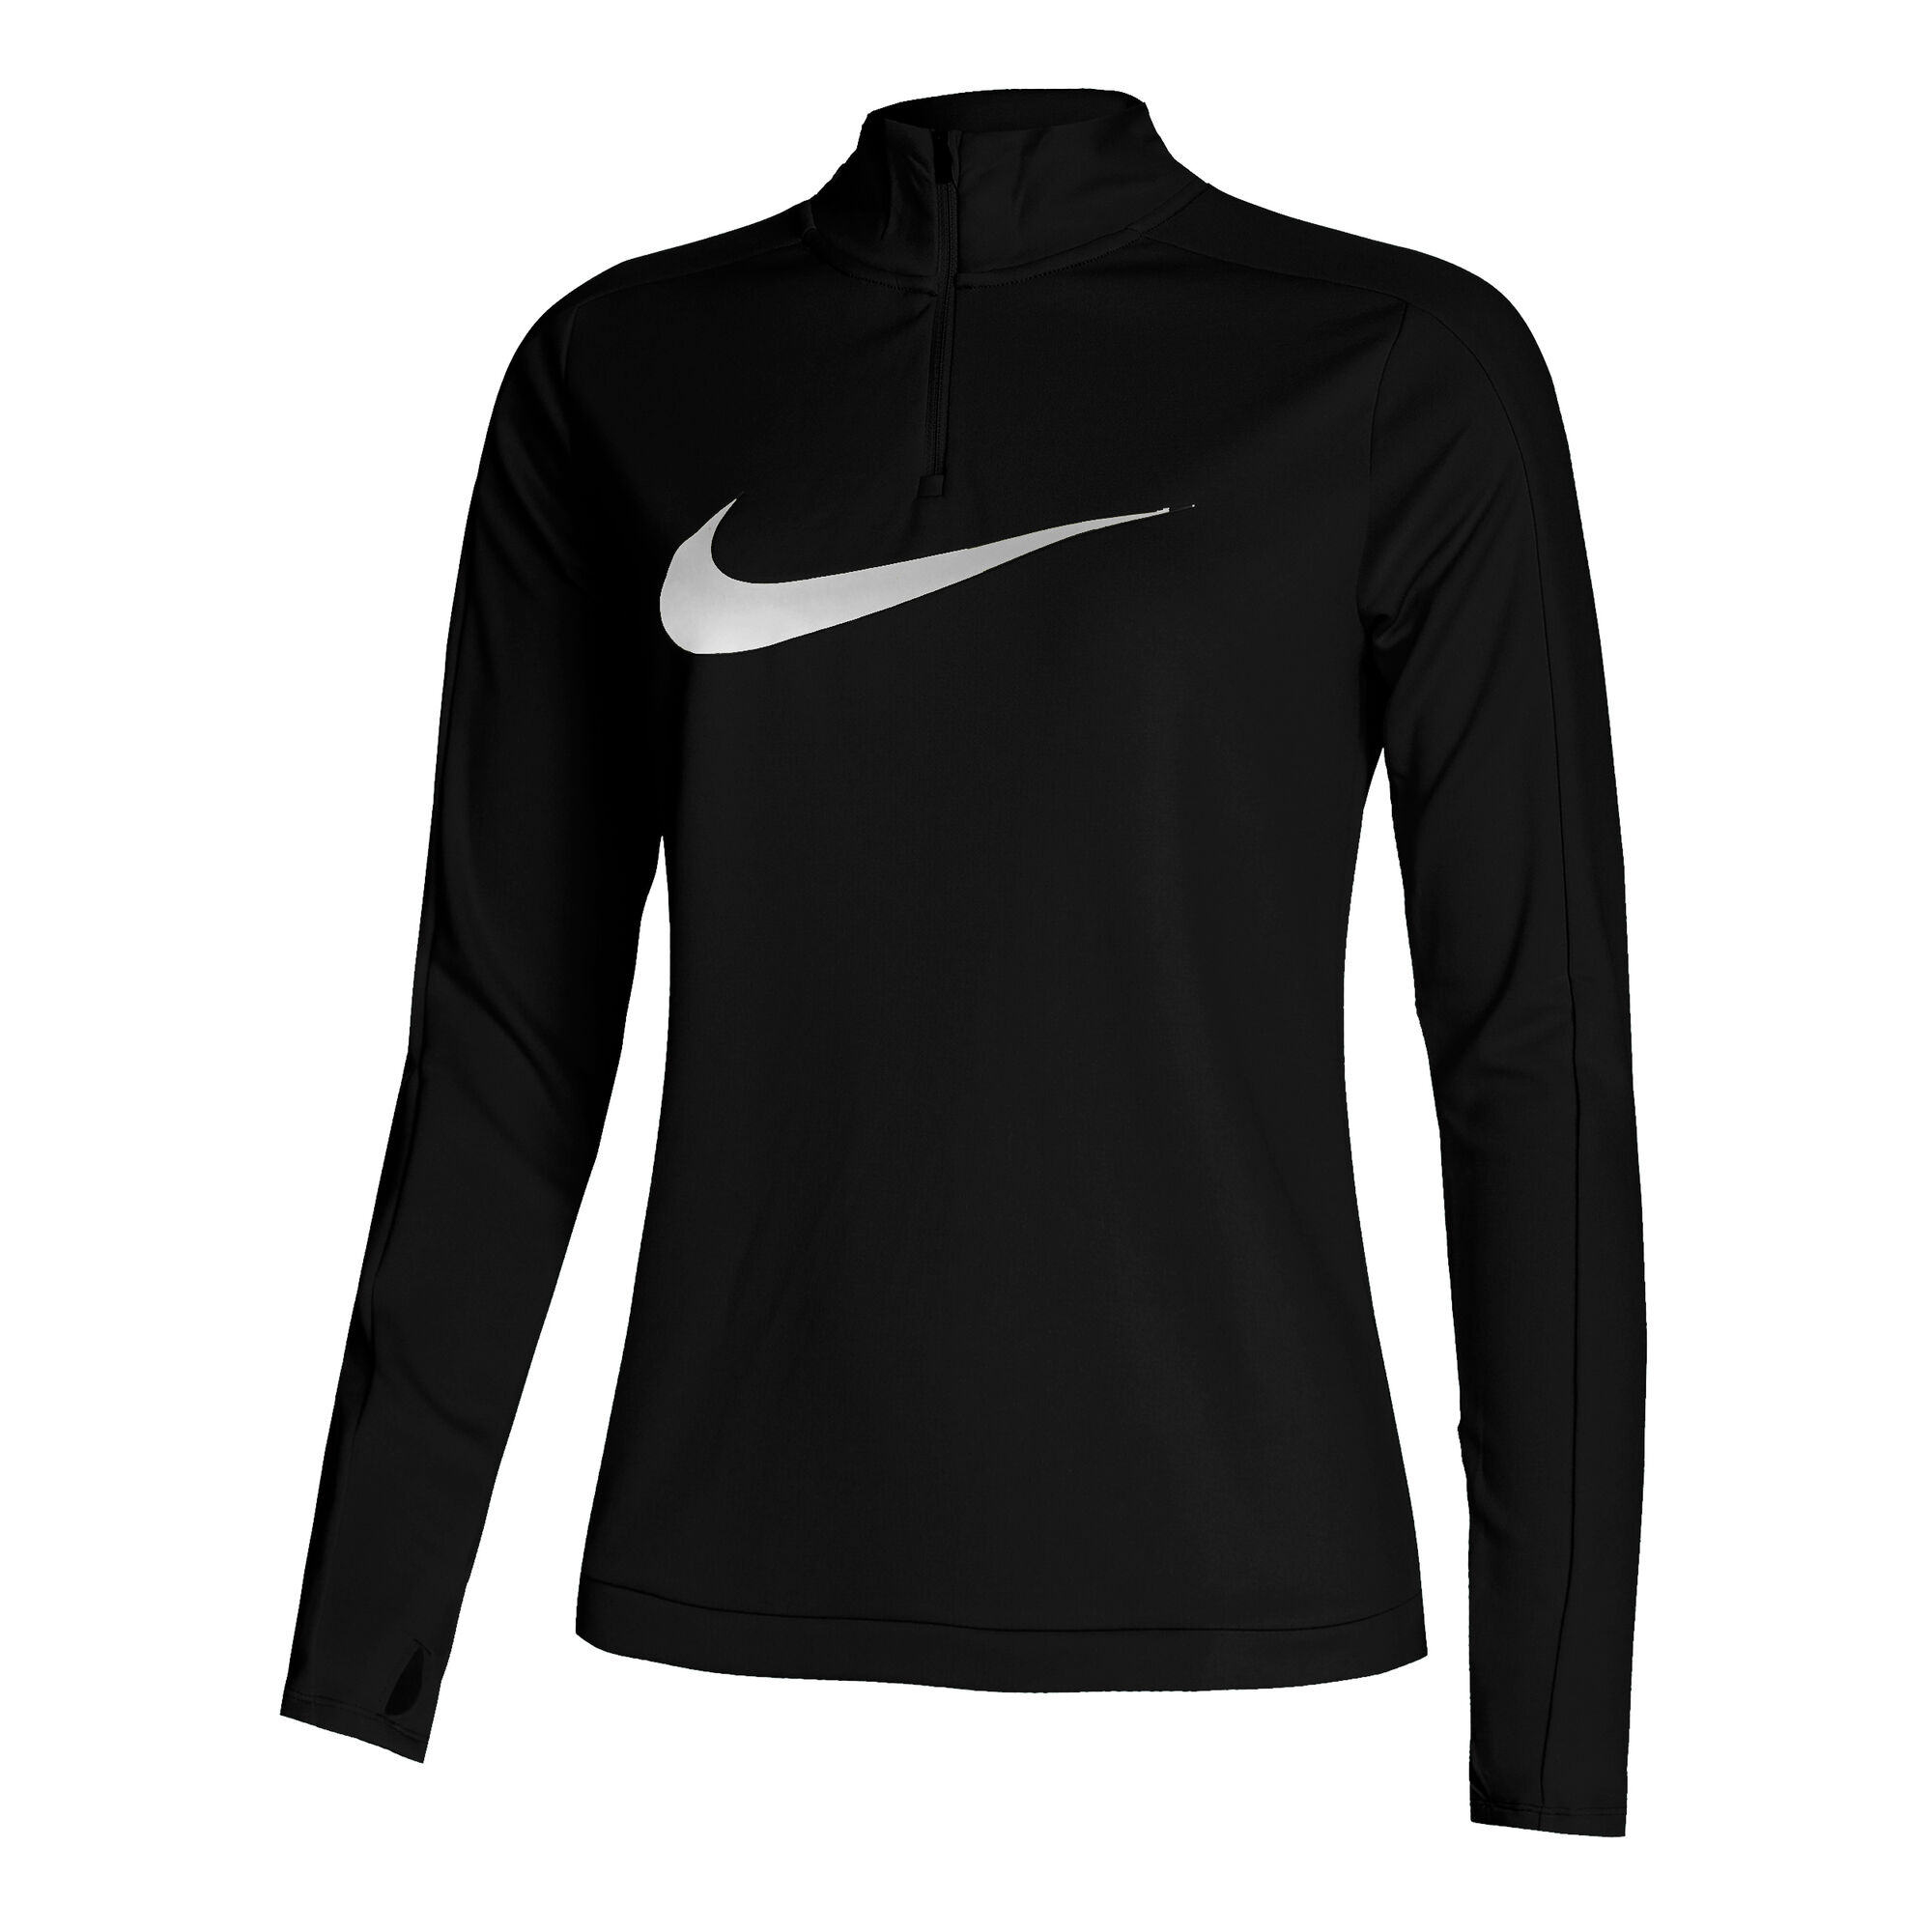 Buy Nike Dri-Fit Swoosh HBR Half-Zip Running Tops Women Black